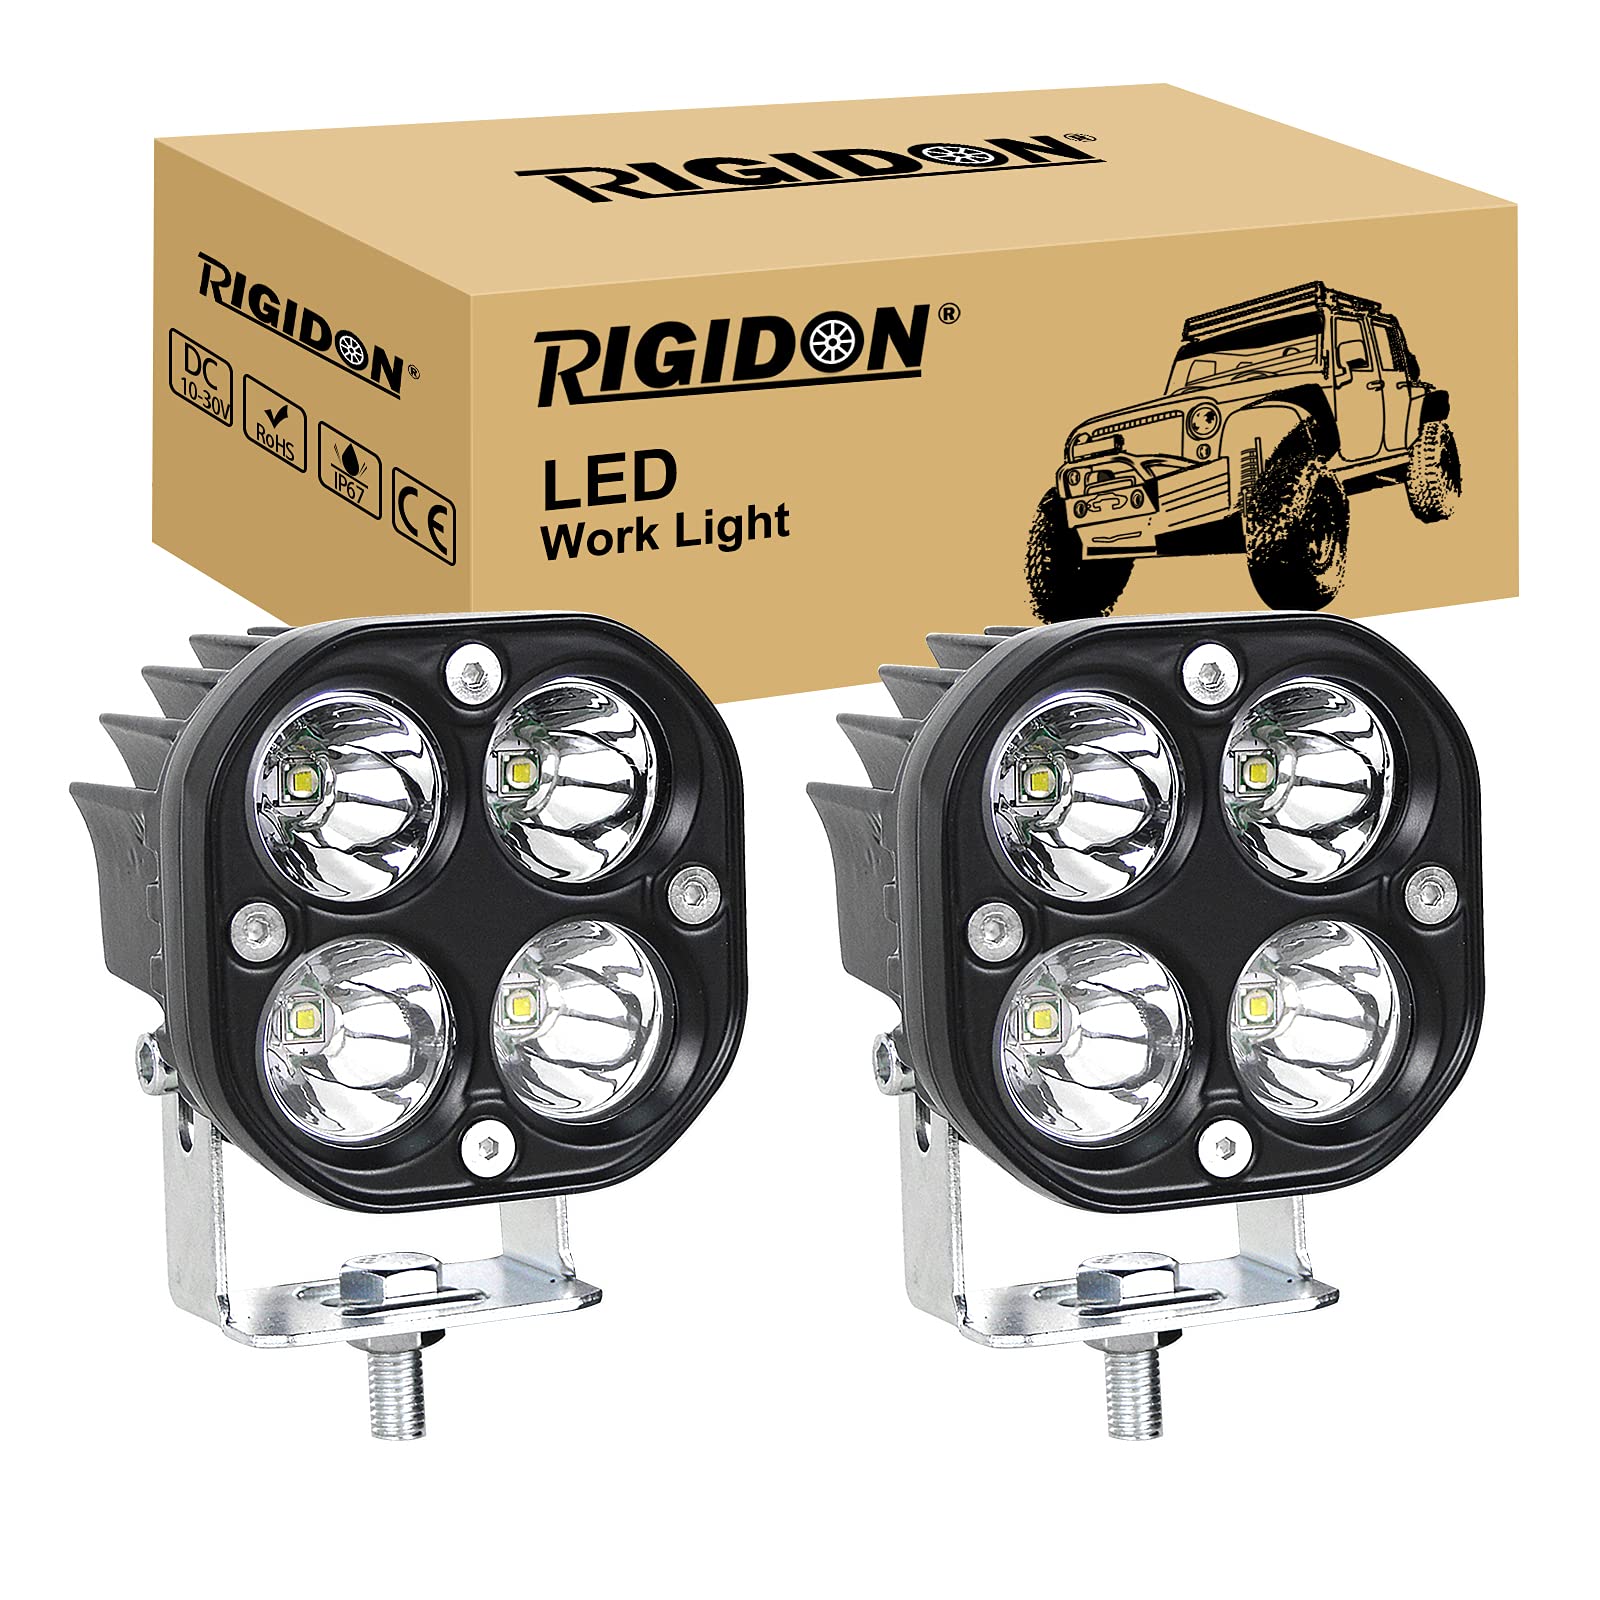 RIGIDON 2 Pcs Led arbeitslicht, 3 Zoll 40W Spot Strahler offroad beleuchtung für Auto SUV ATV Traktor LKW, 4x4 Fahrzeuge, Led nebelscheinwerfer, Led arbeitsscheinwerfer led scheinwerfer, 6000K Weiß von RIGIDON